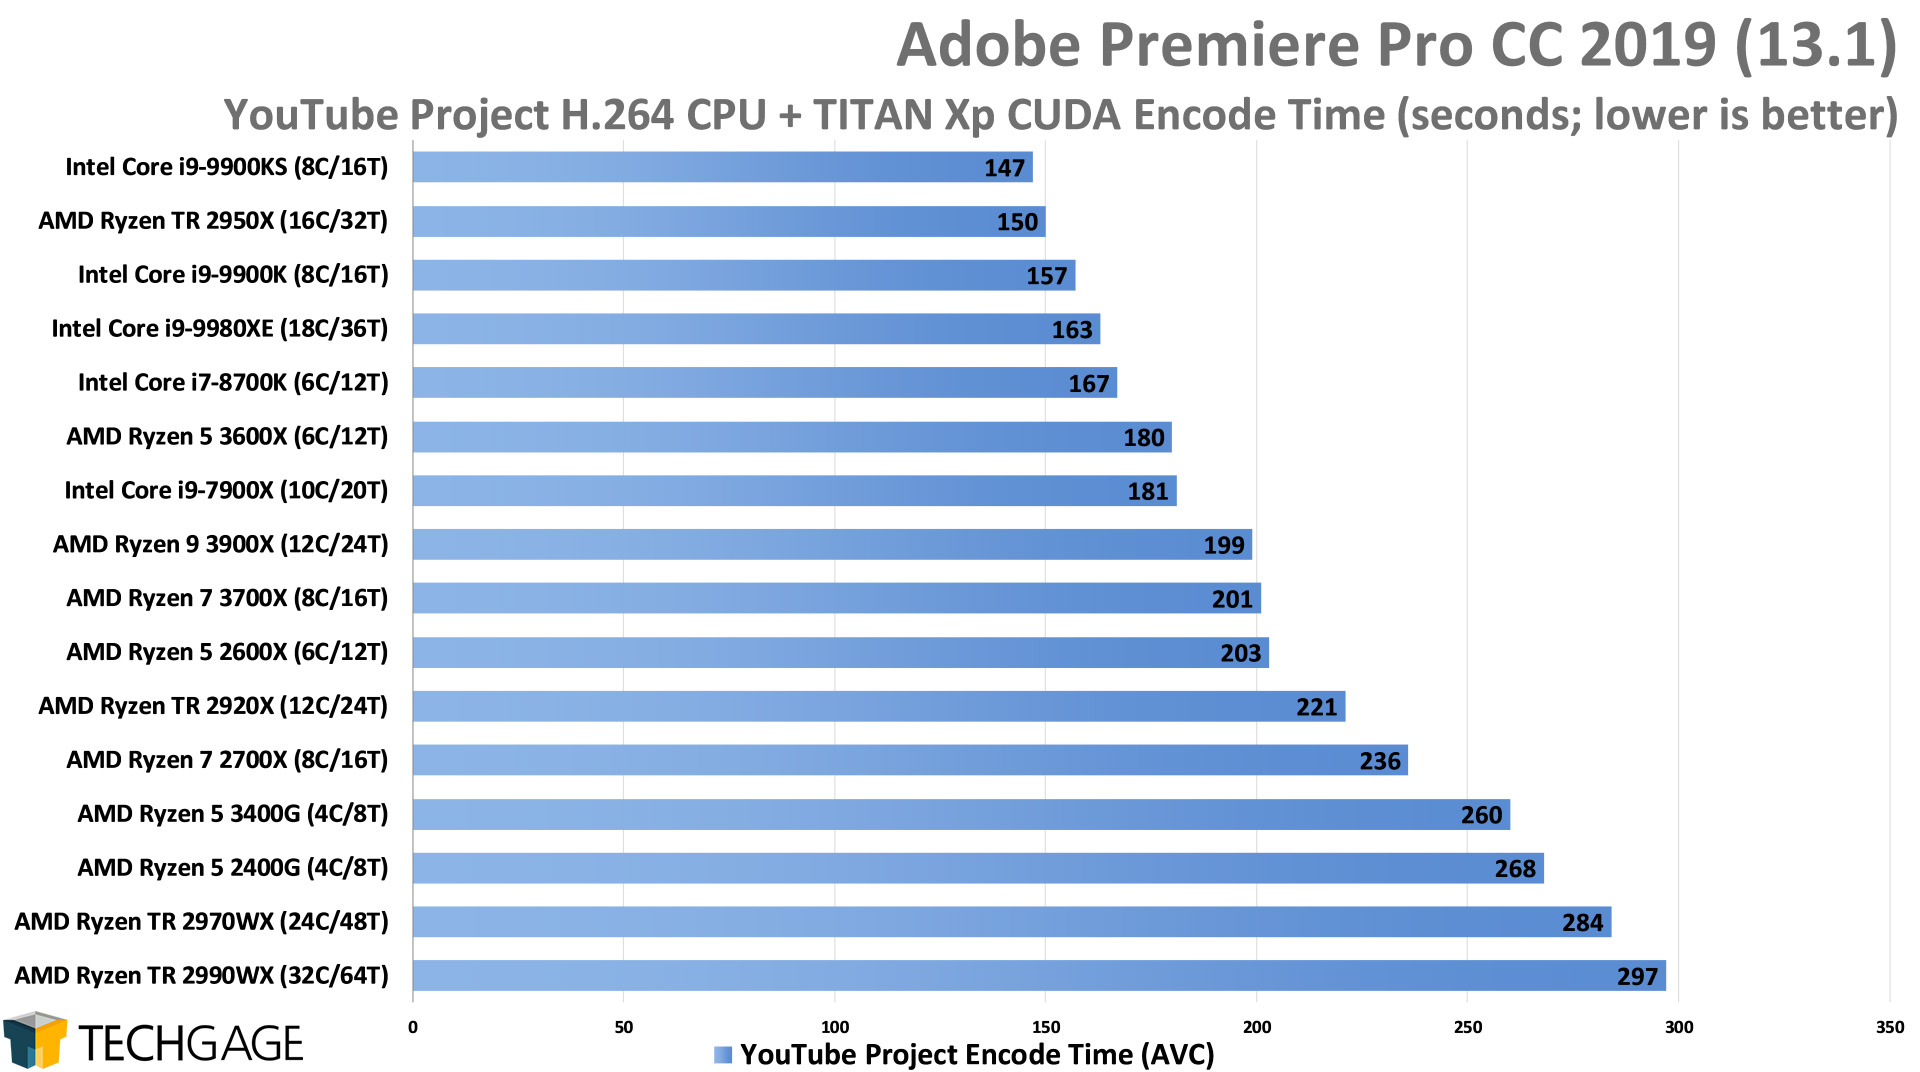 Adobe Premiere Pro 2019 - YouTube Project CUDA Encode Performance (Intel Core i9-9900KS)